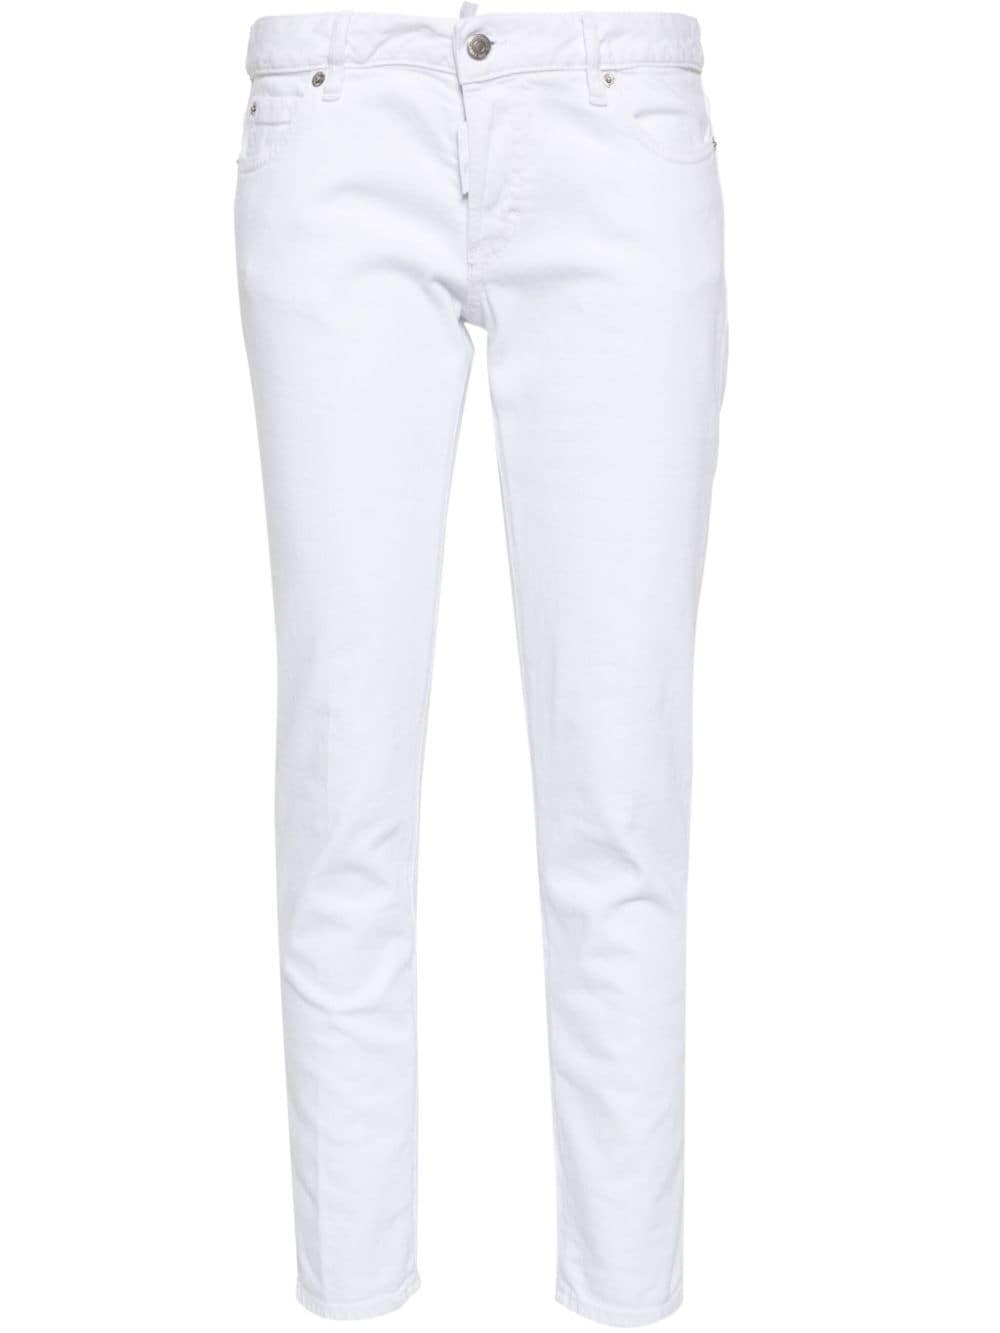 White stretch- cotton jeans